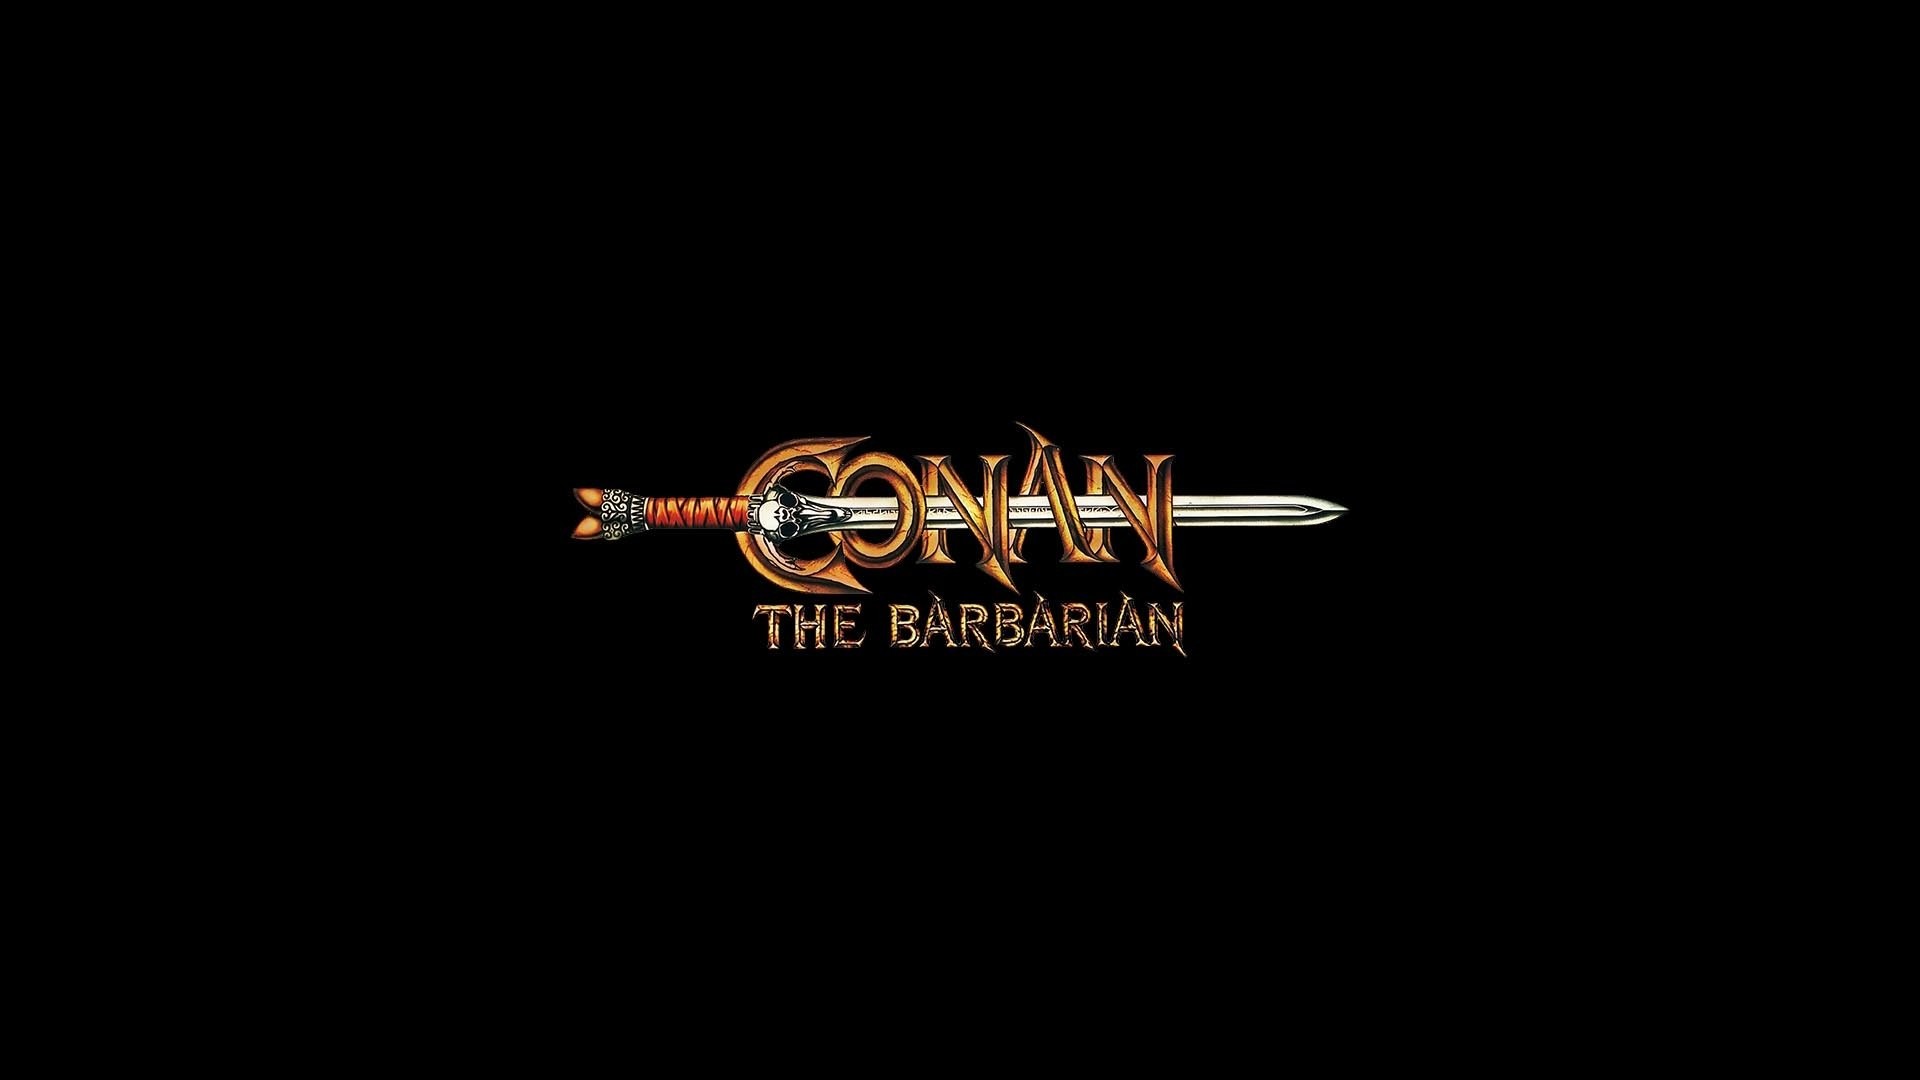 1920x1080 Movie - Conan the Barbarian (2011) Wallpaper